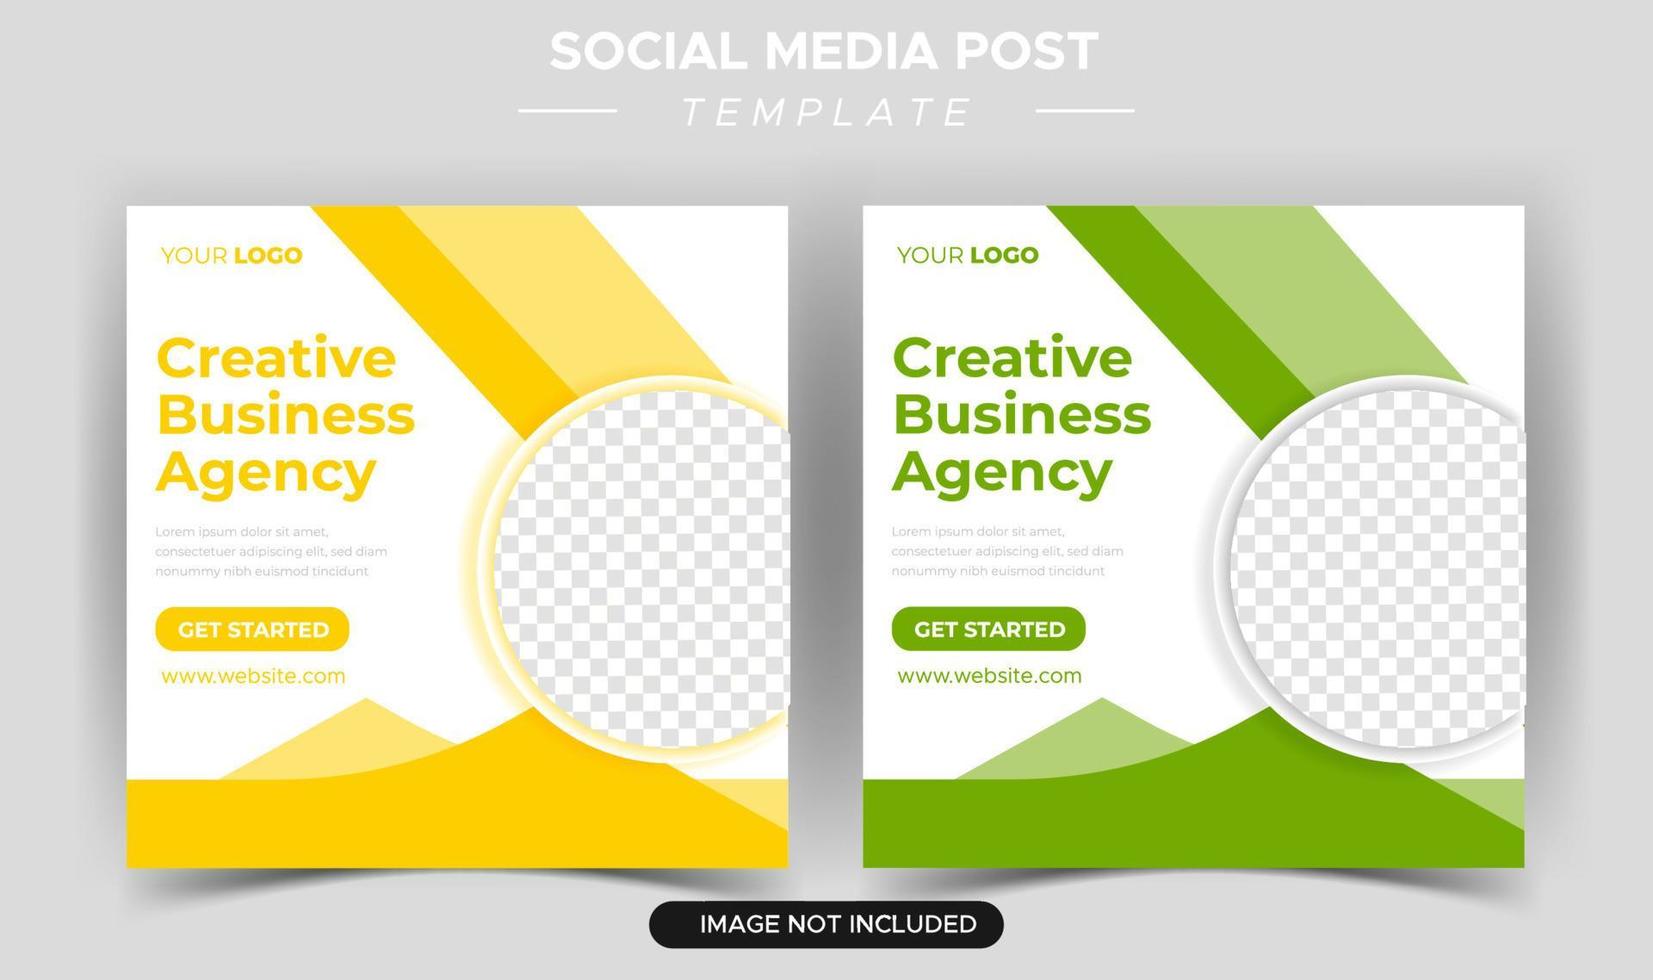 Creative business marketing expert social media templateg agency instagram post template vector